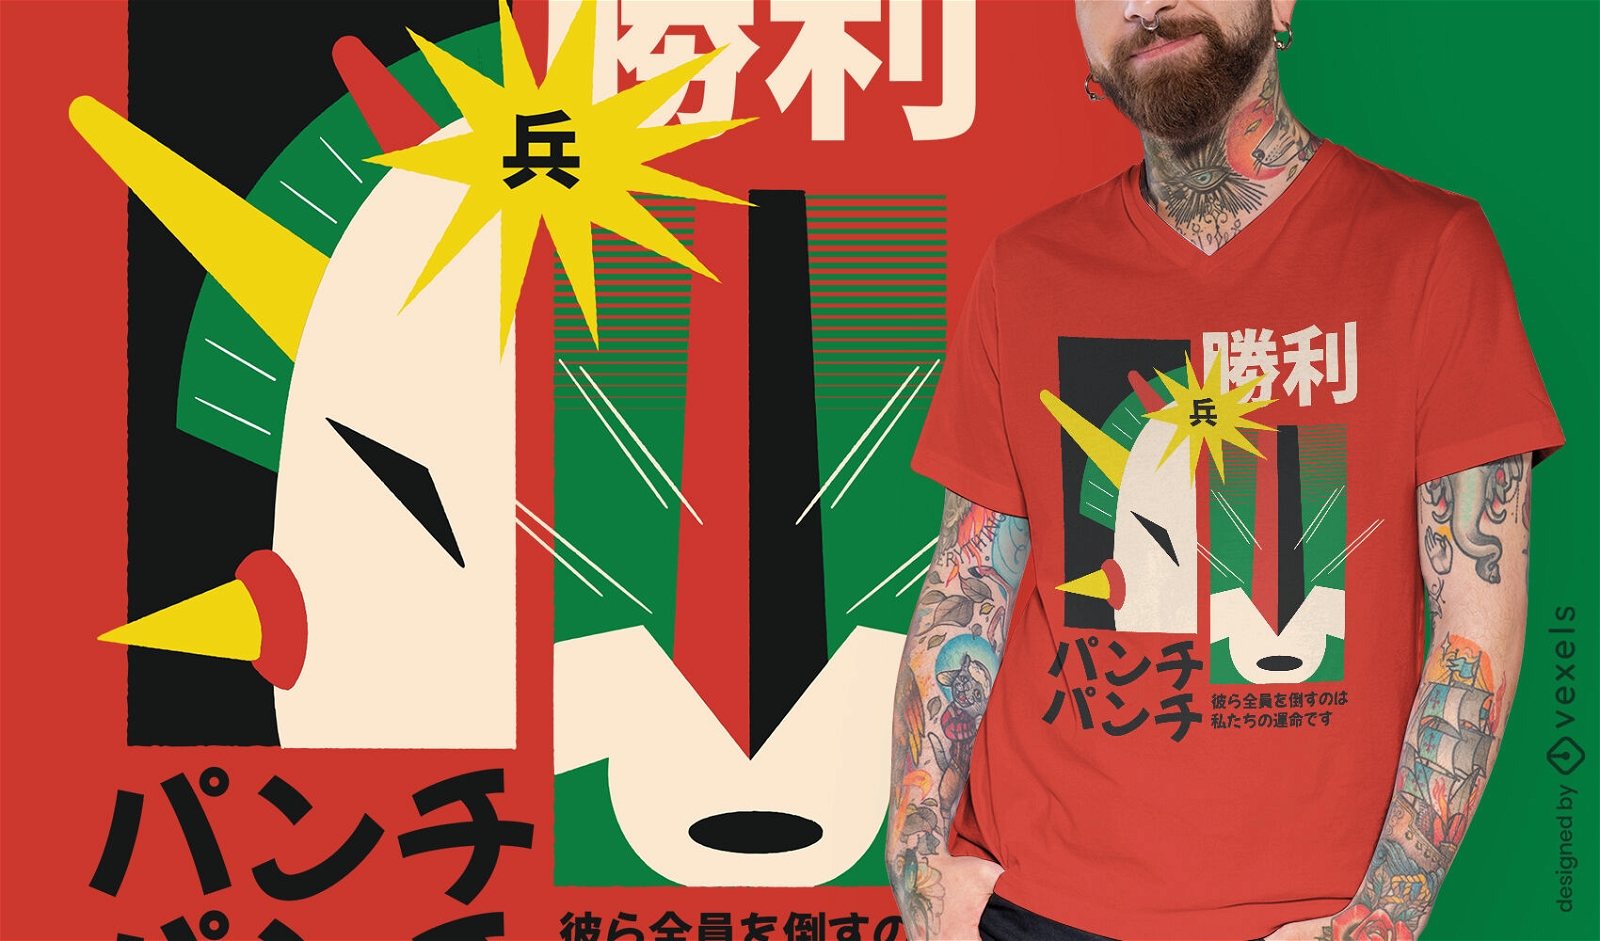 Japanese robot illustration t-shirt design